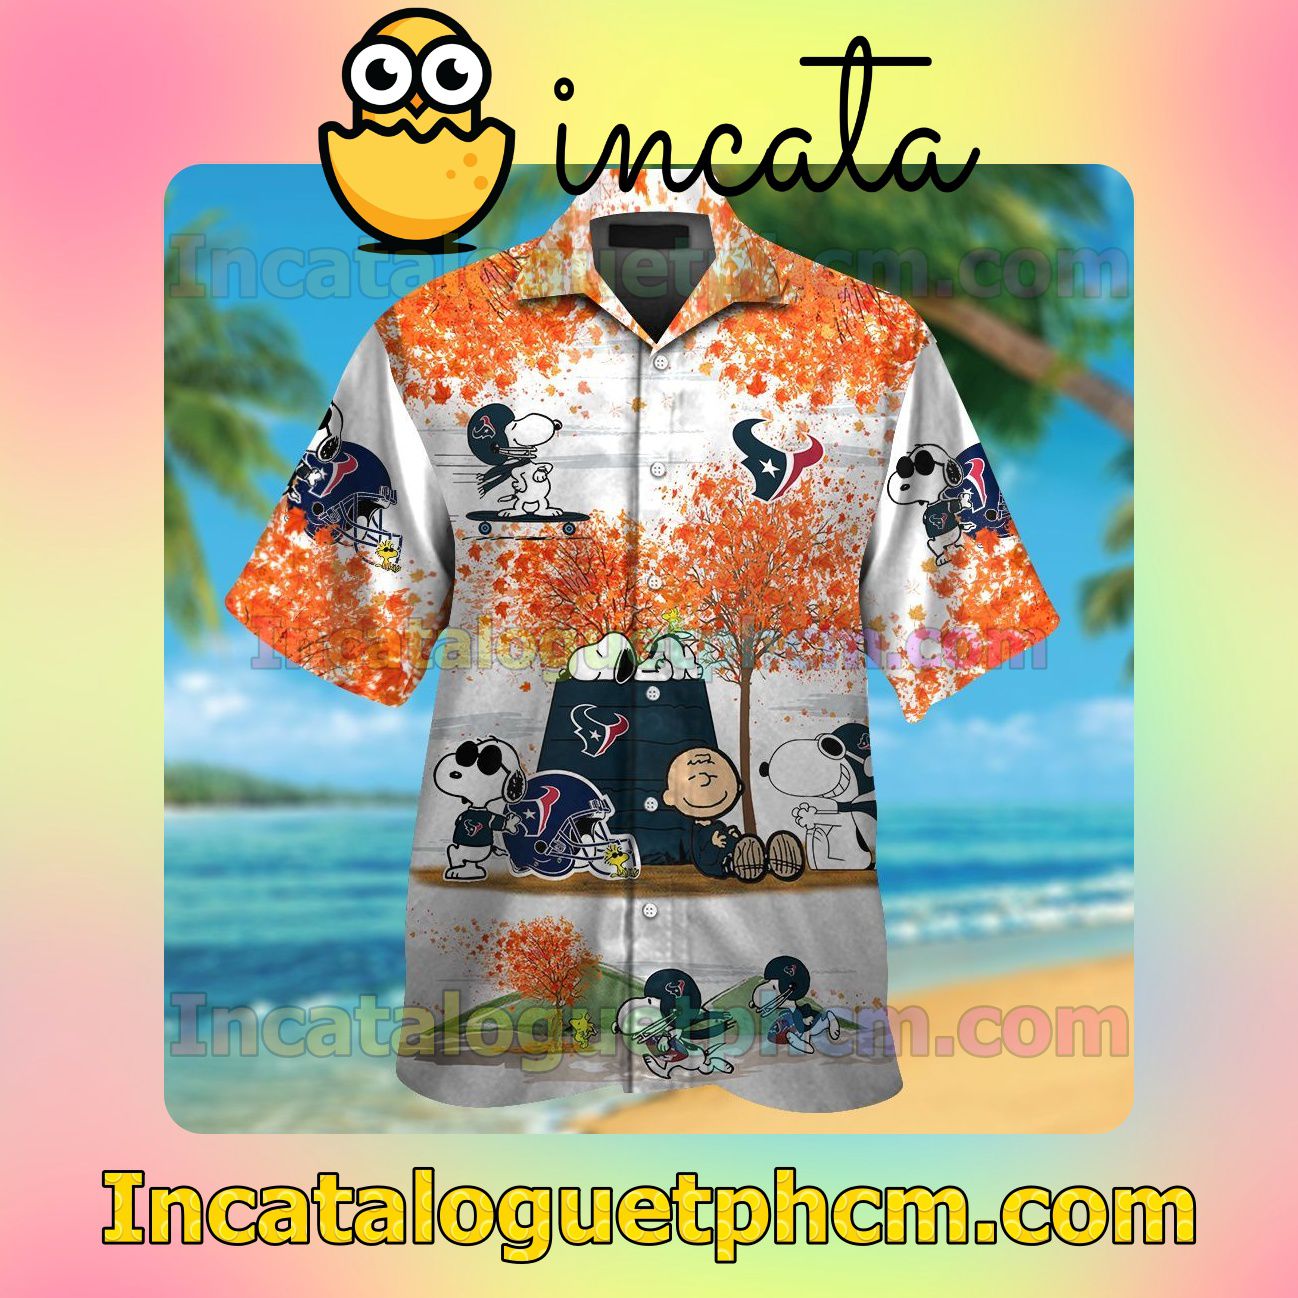 Houston Texans Snoopy Autumn Beach Vacation Shirt, Swim Shorts